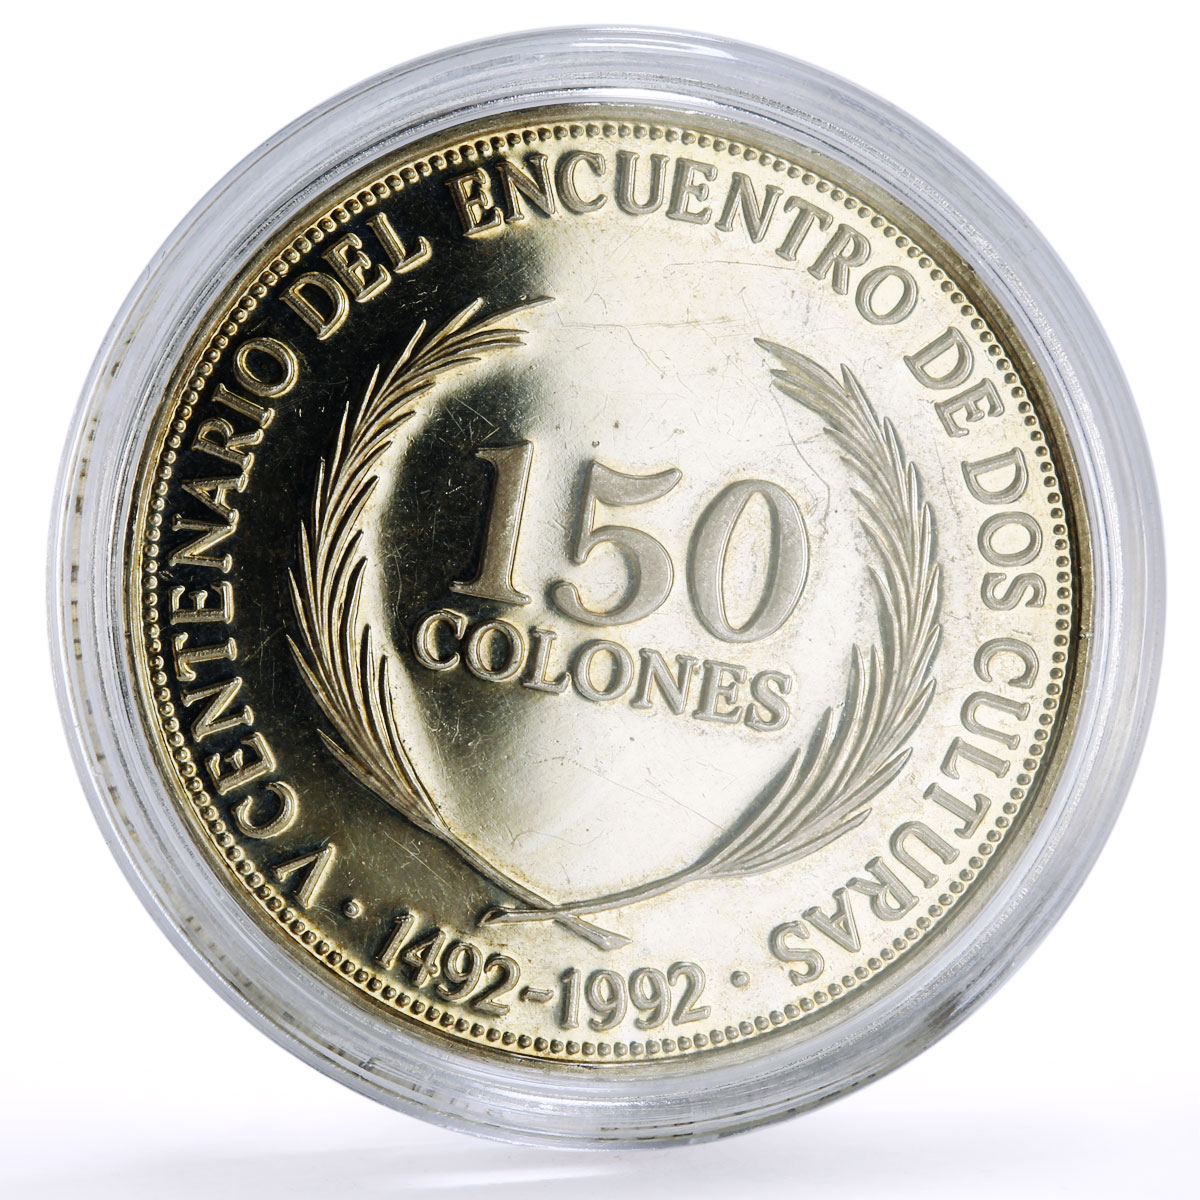 El Salvador 150 colones America Discovery Columbus Ships KM-160 silver coin 1992